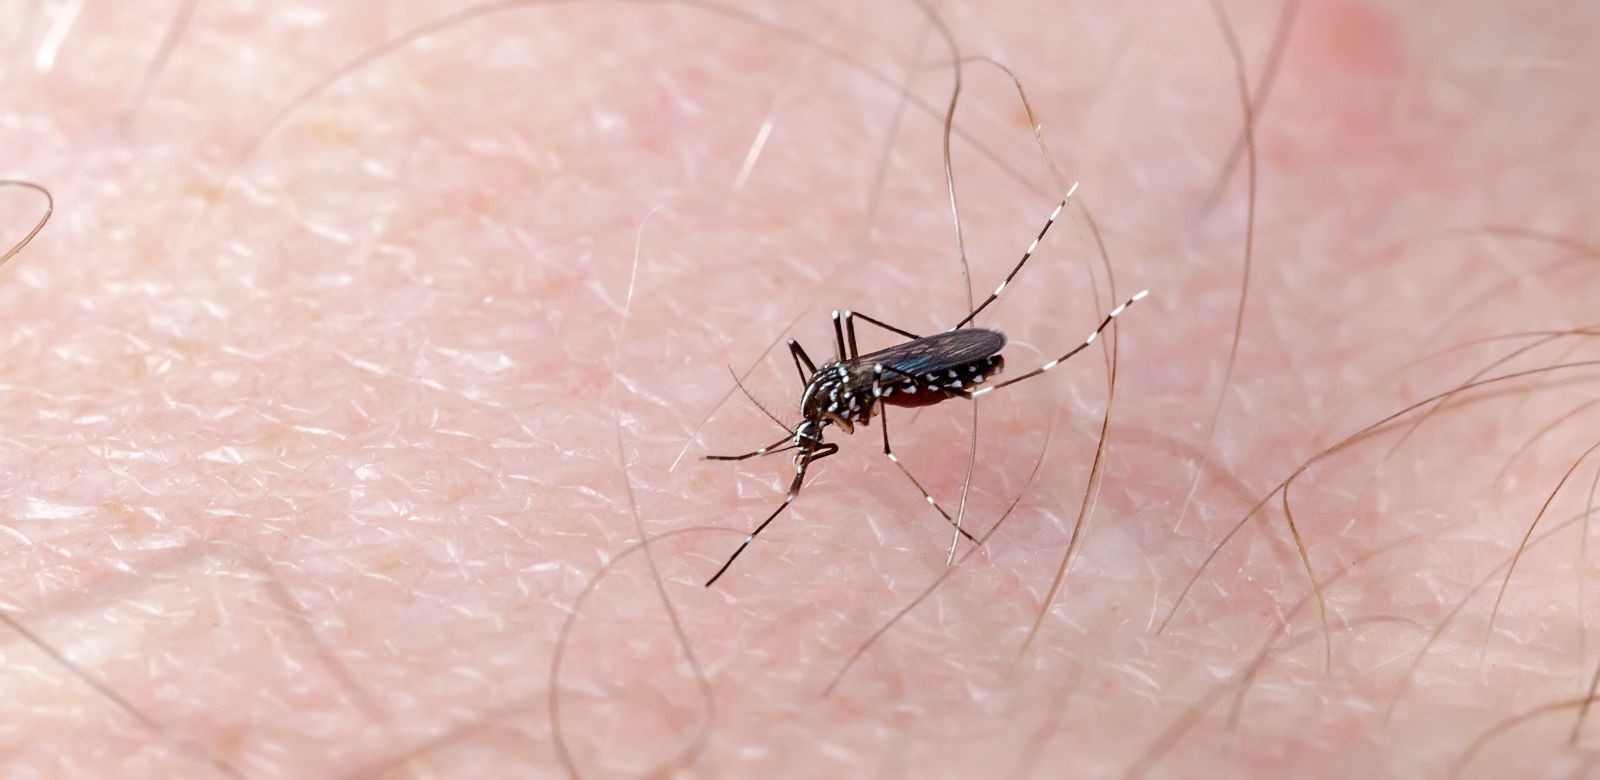 Mosquito dengue